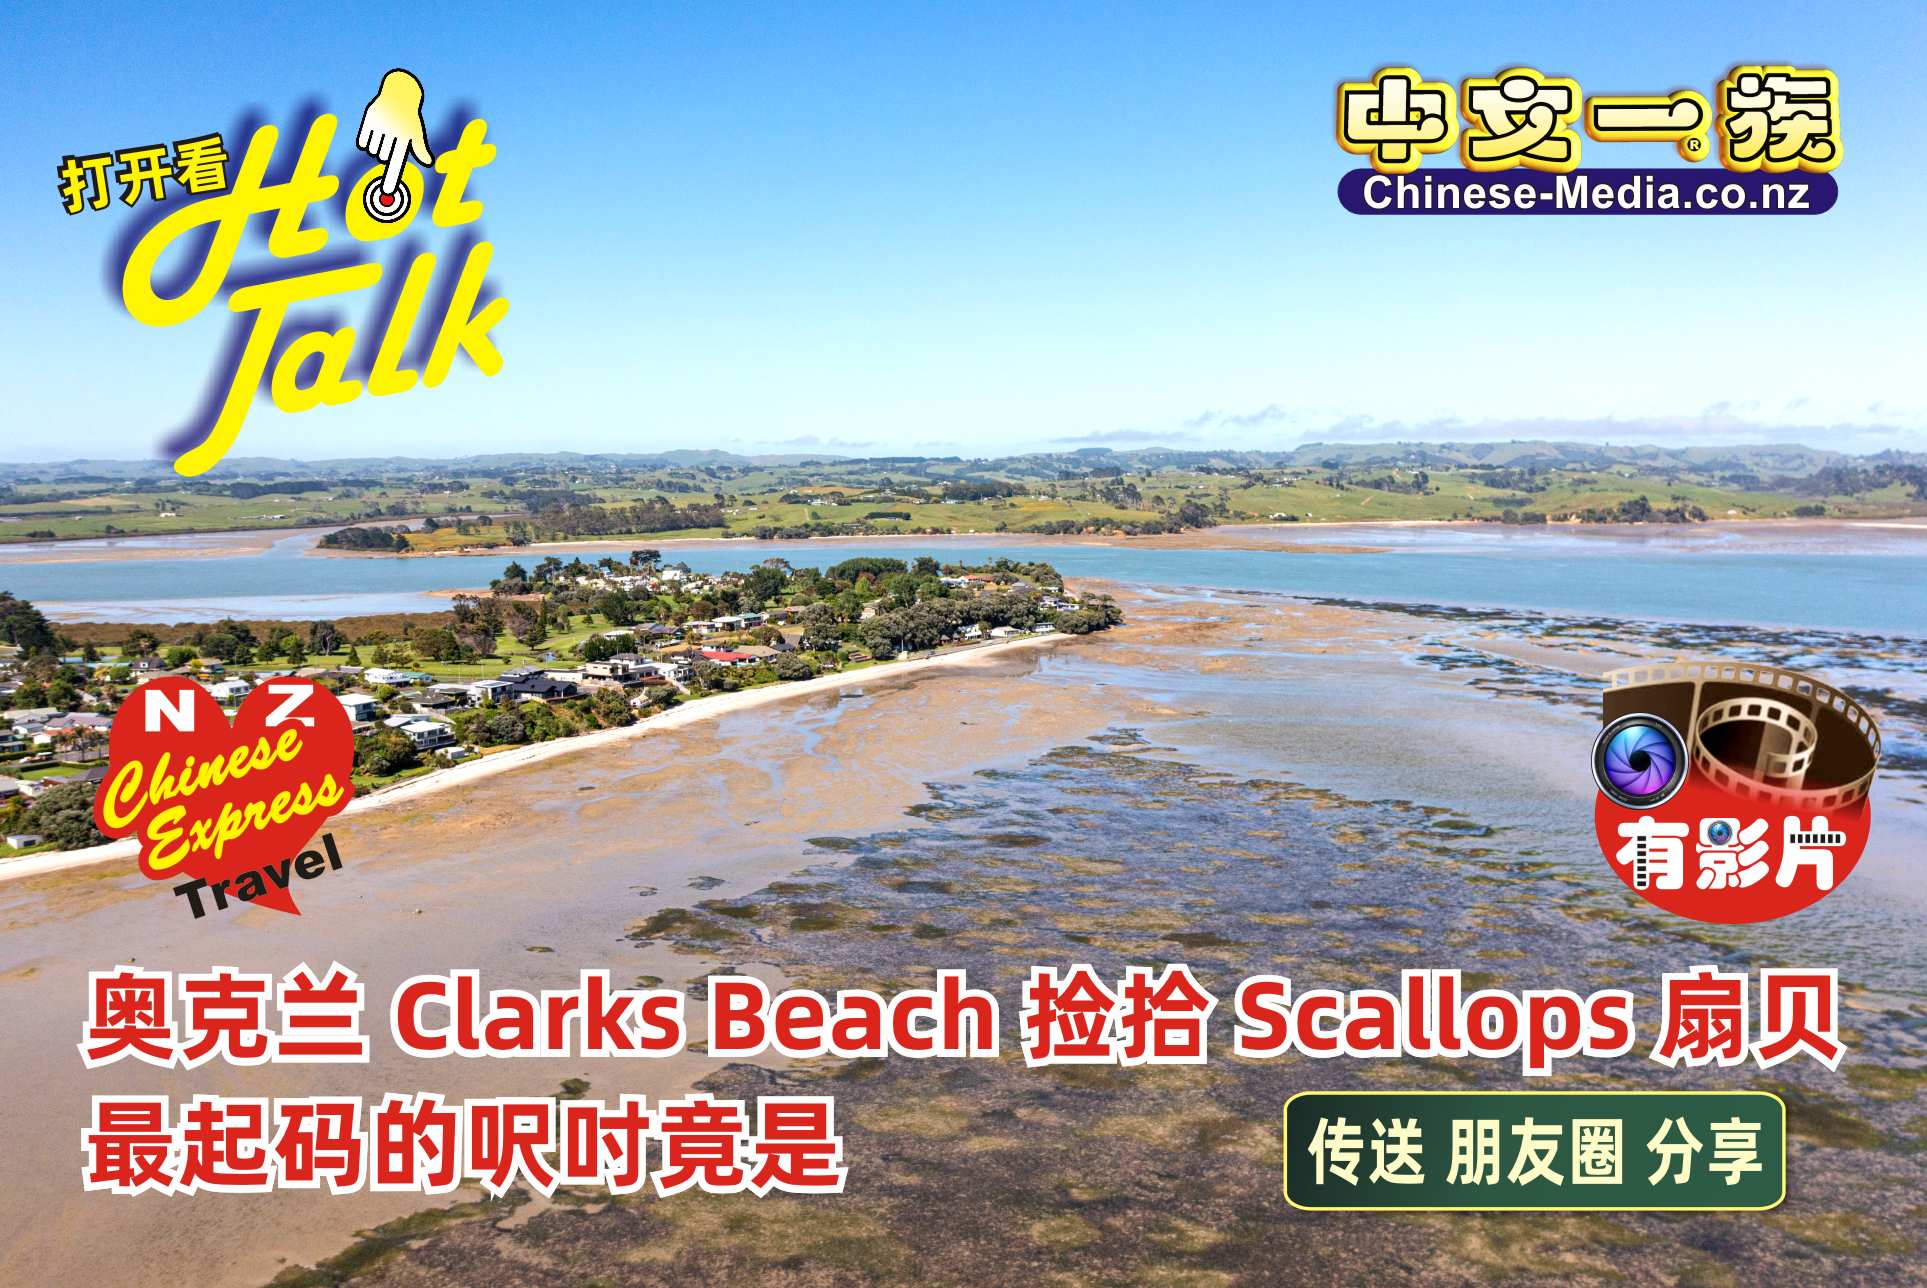 Clarks Beach Scallops Waiuku River 克拉克斯海滩  中文一族傳媒新西蘭旅遊景點